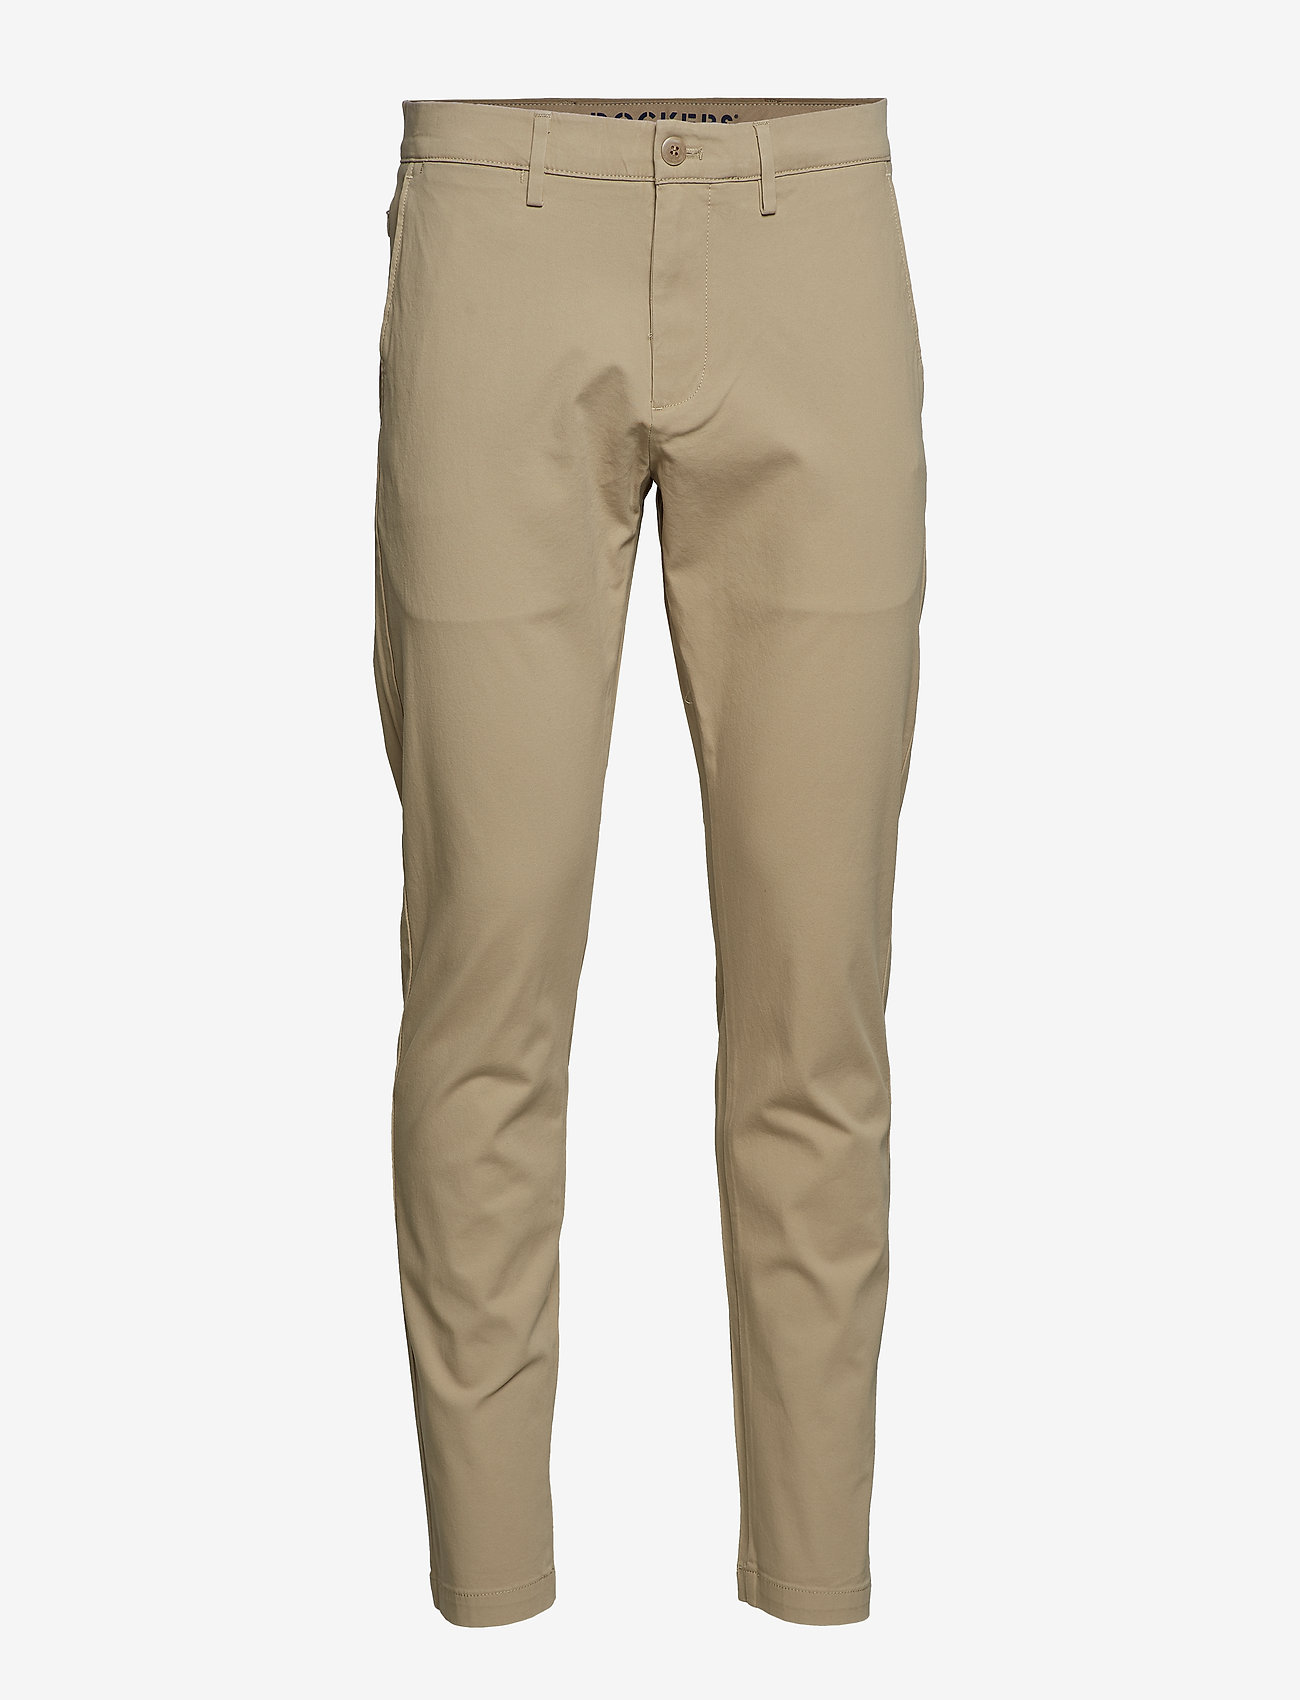 cap Baron Mount Bank Dockers Smart 360 Chino Dockers Khaki - Tailored trousers | Boozt.com